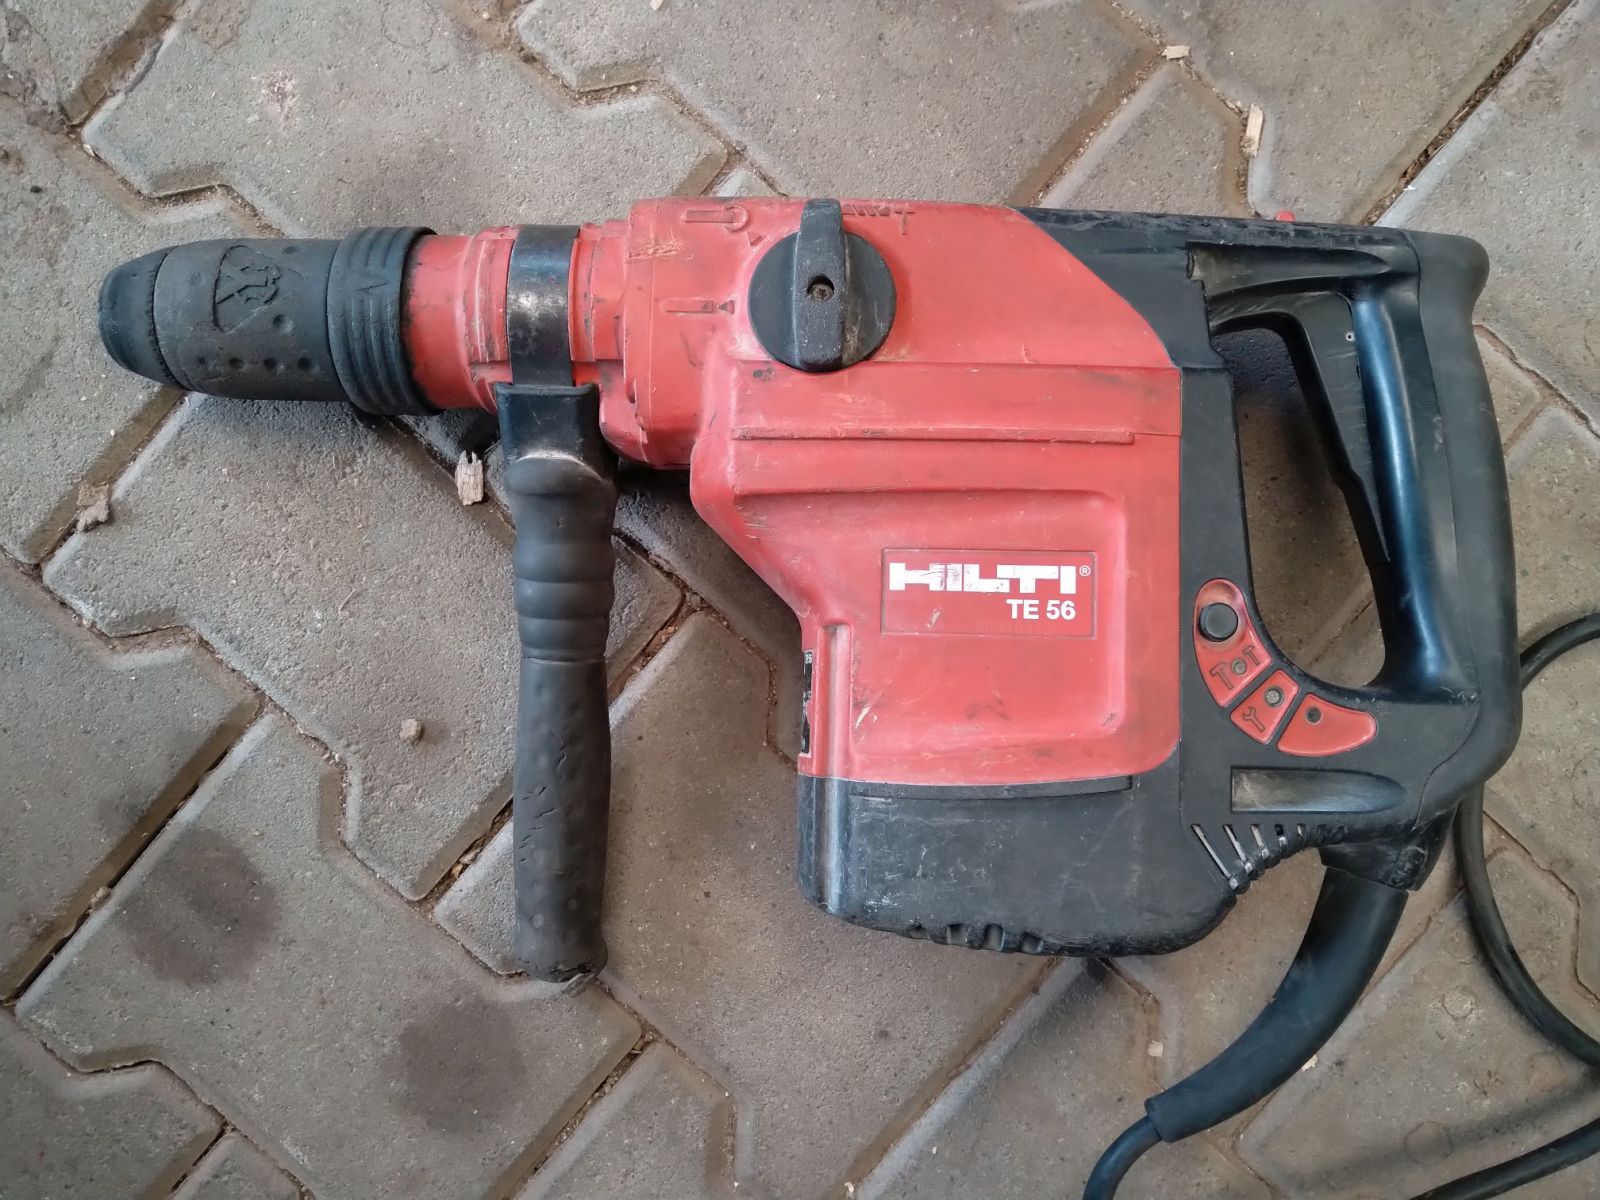 Hilti TE56 hammer drill